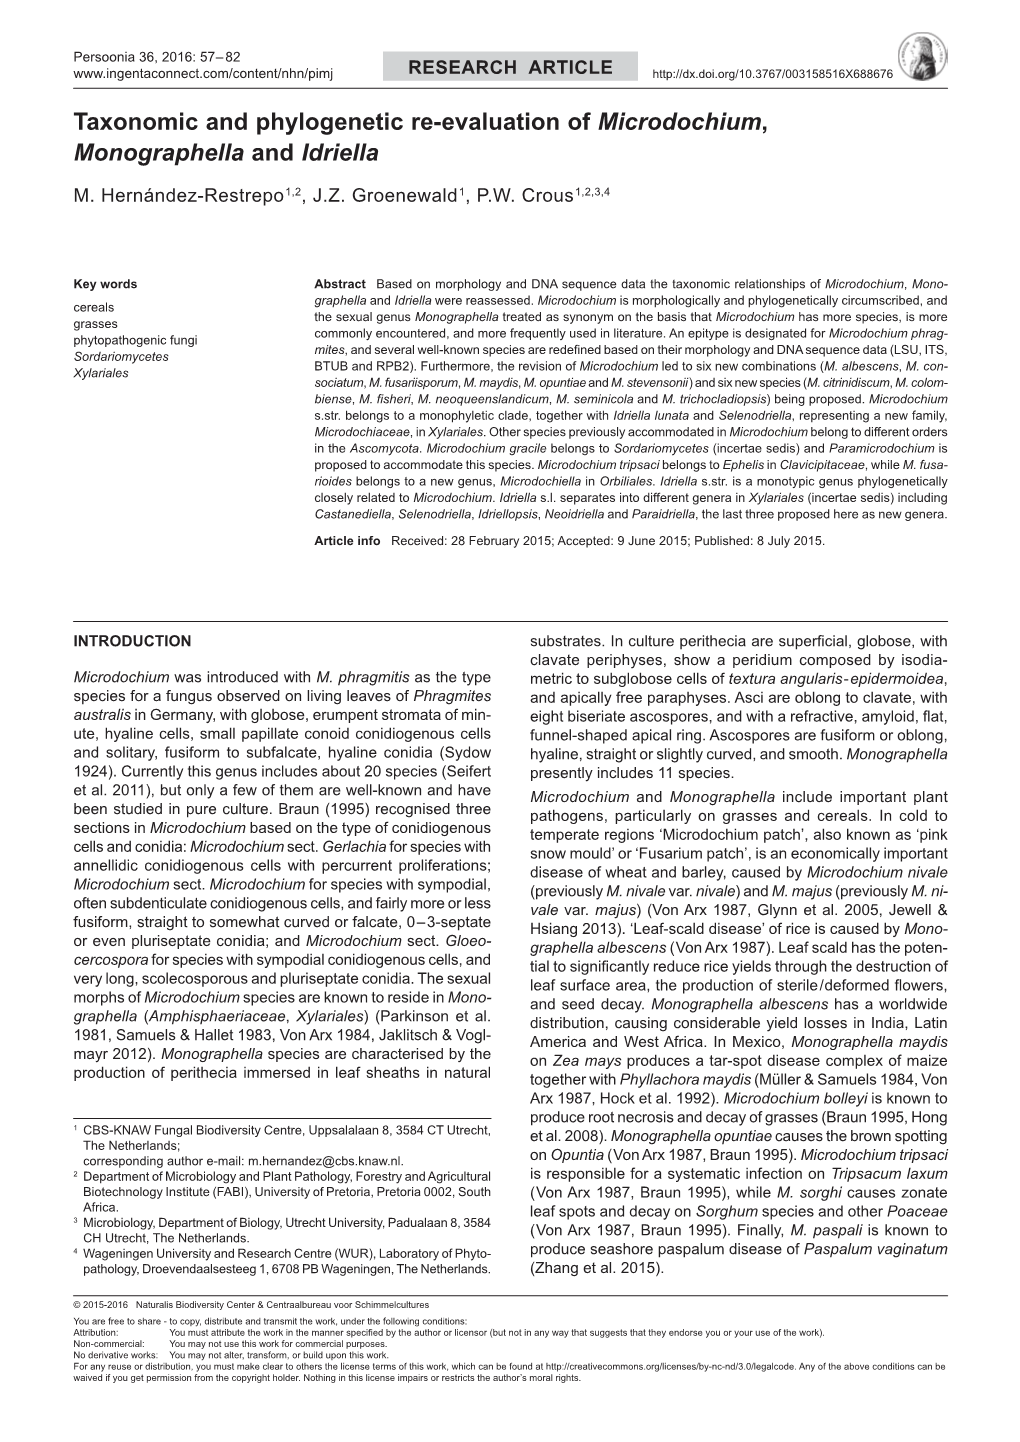 Taxonomic and Phylogenetic Re-Evaluation of Microdochium, Monographella and Idriella